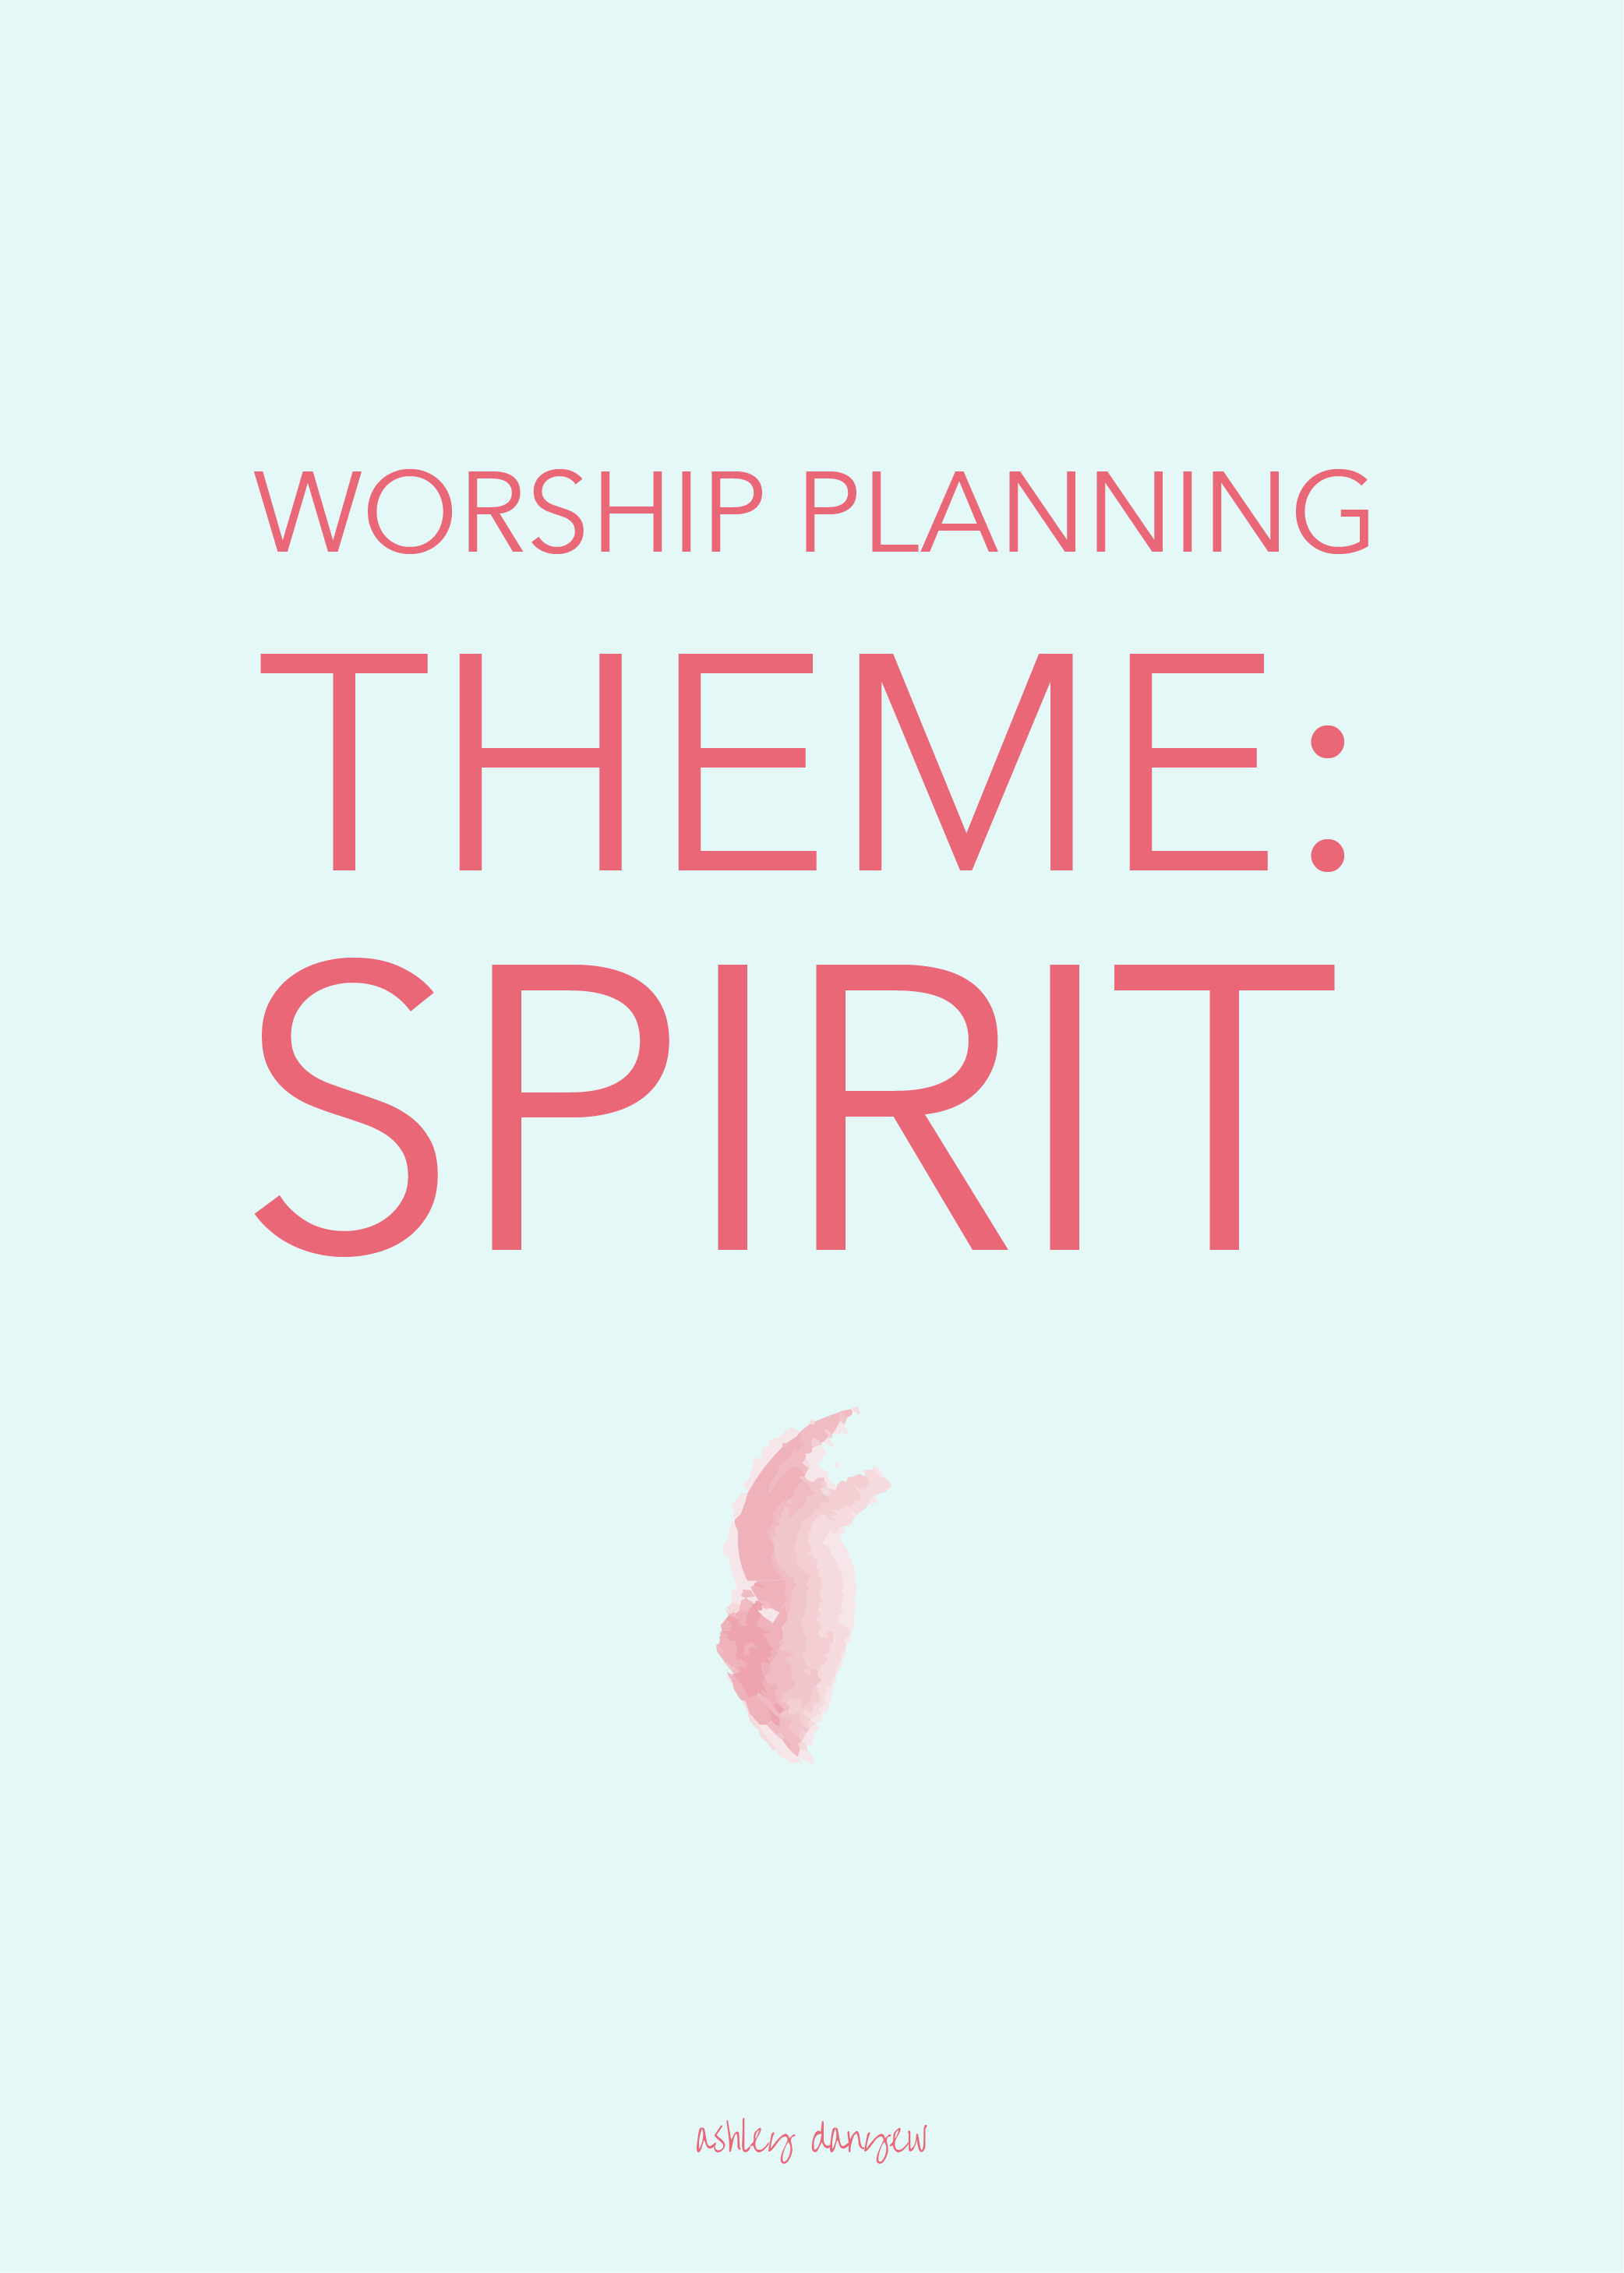 Copy of Worship Planning Theme: Spirit